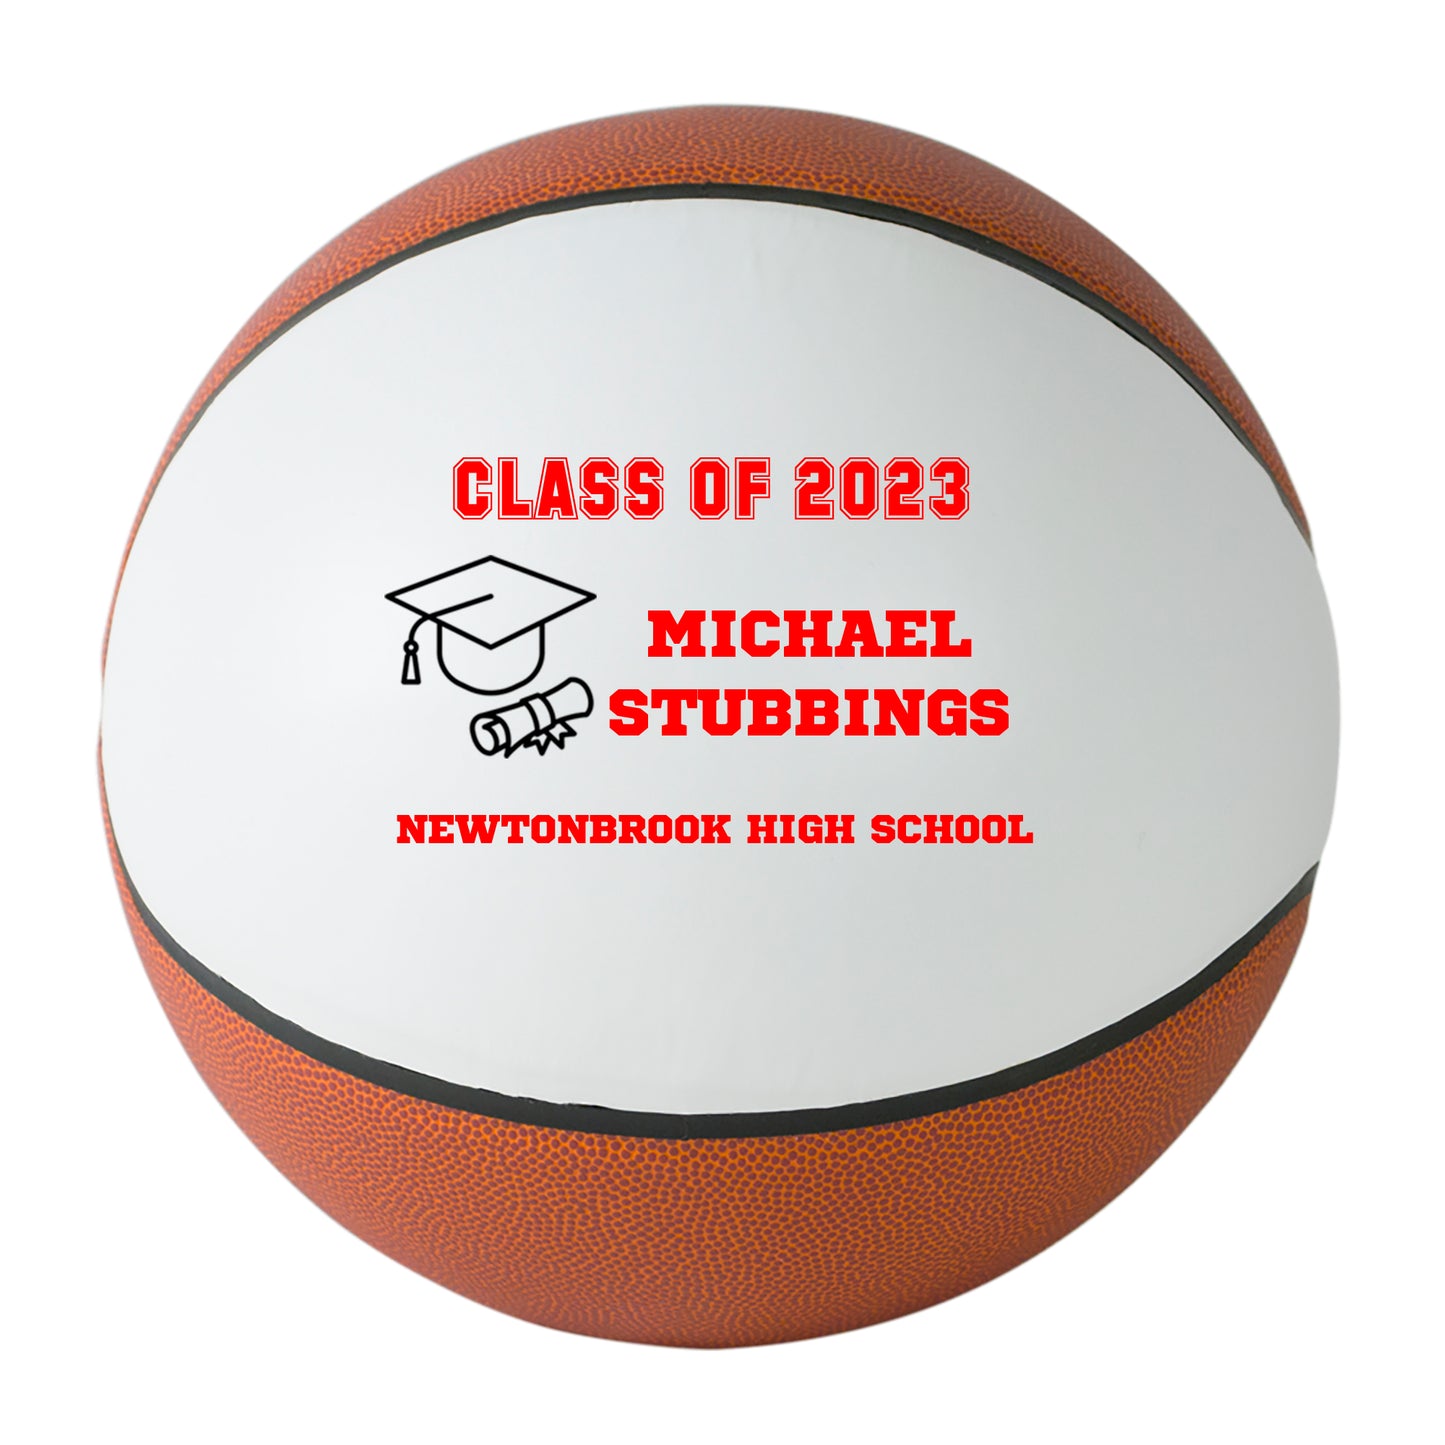 Class of 2023 Graduation Basketball Keepsake Gift - Personalized Senior 2023 Basketball